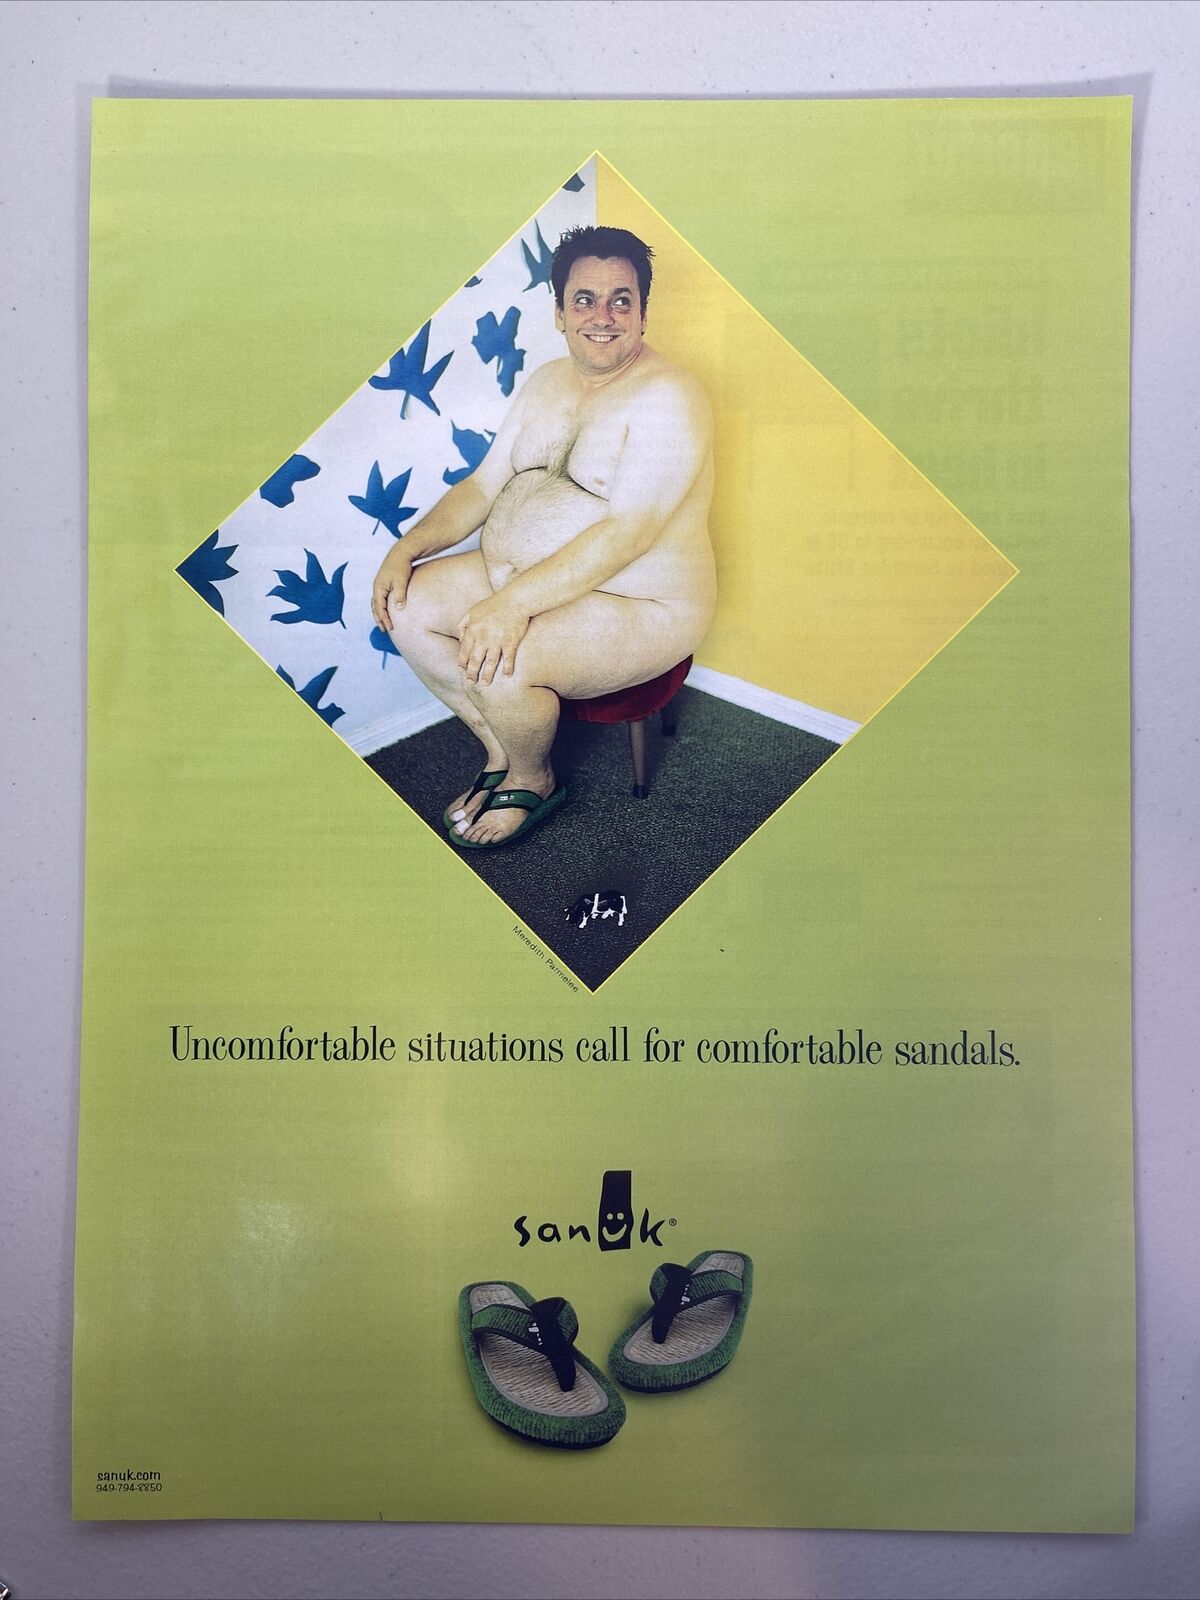 2000 Sanuk sandals ad funny original advertisement Naked Man Men Humor Nude